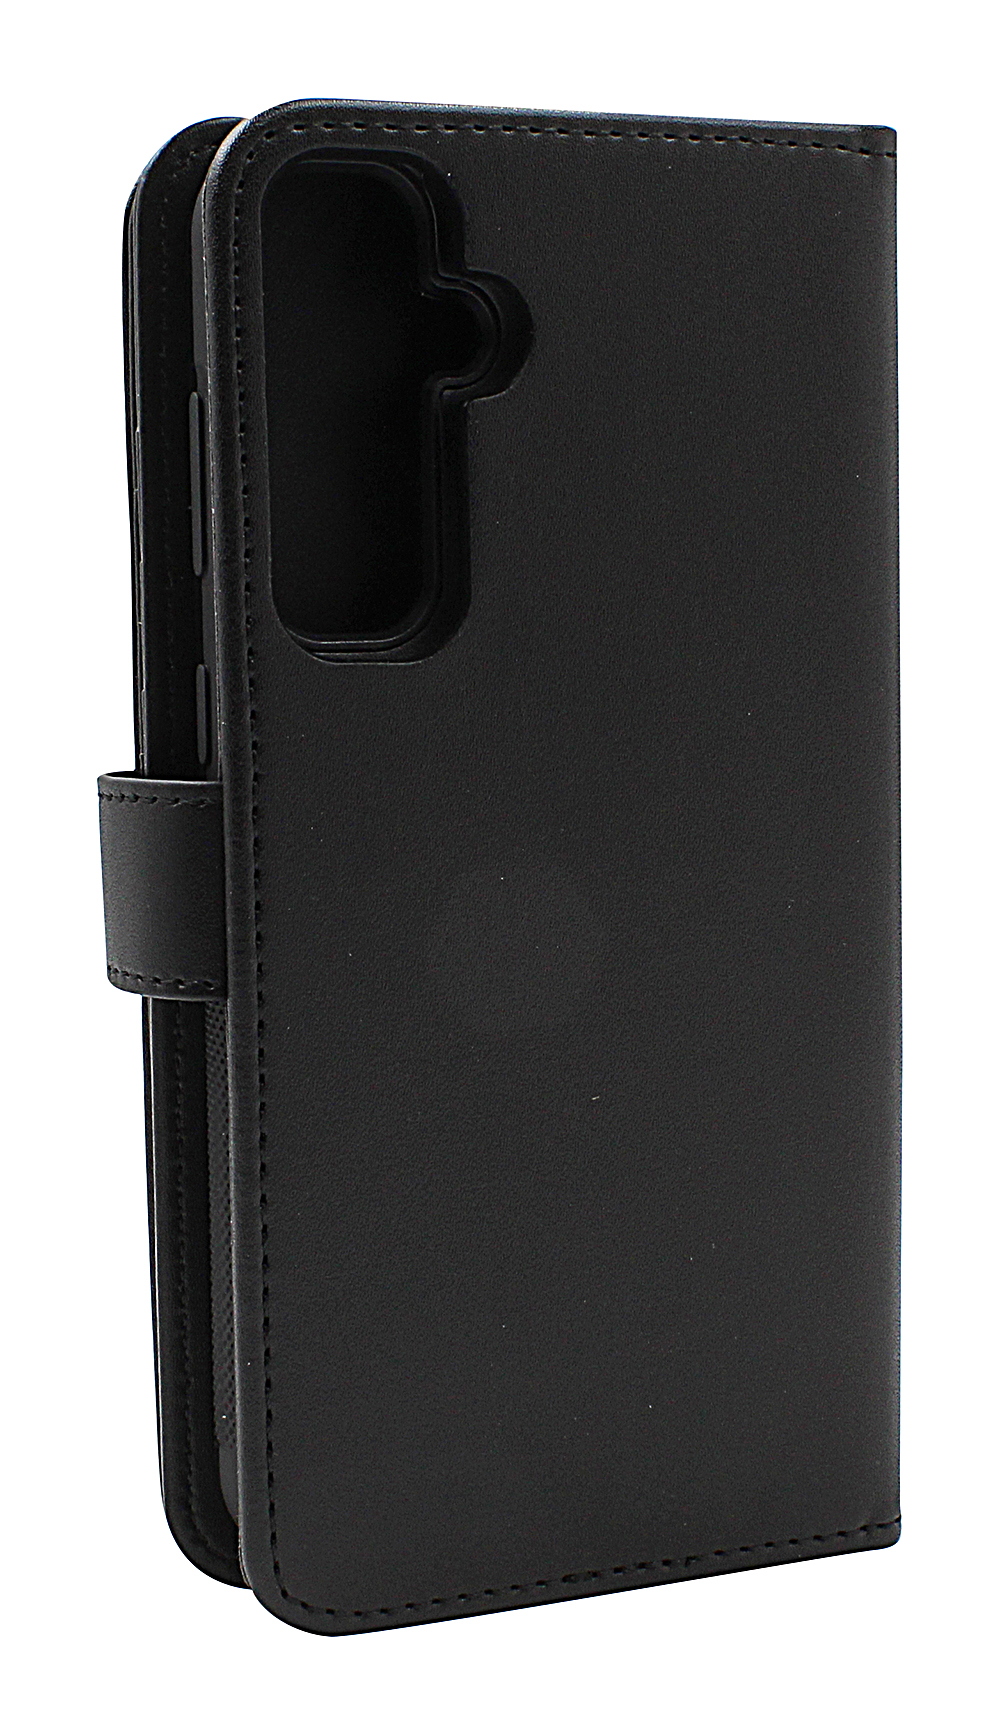 Skimblocker XL Magnet Wallet Samsung Galaxy S23 FE 5G